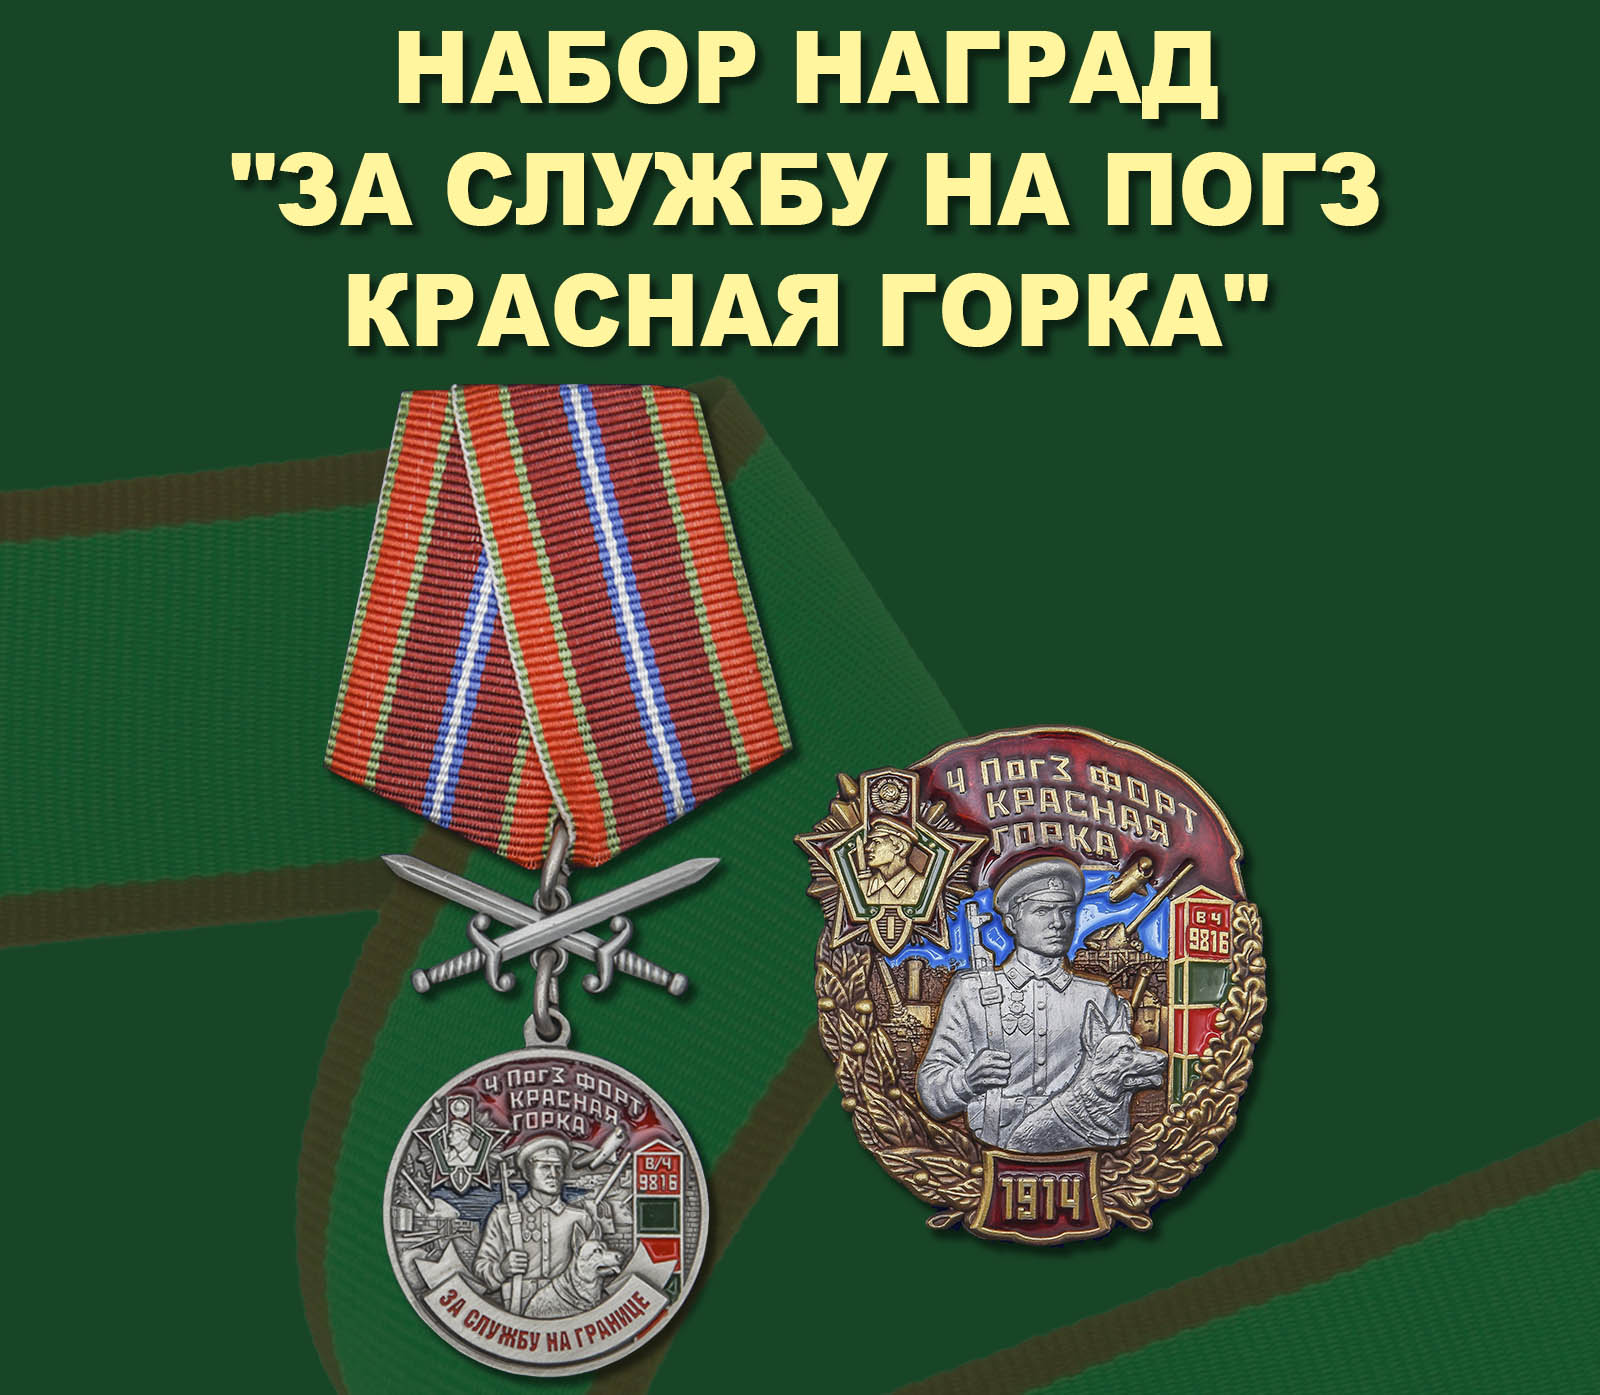 Набор наград  "За службу на ПогЗ Красная горка"